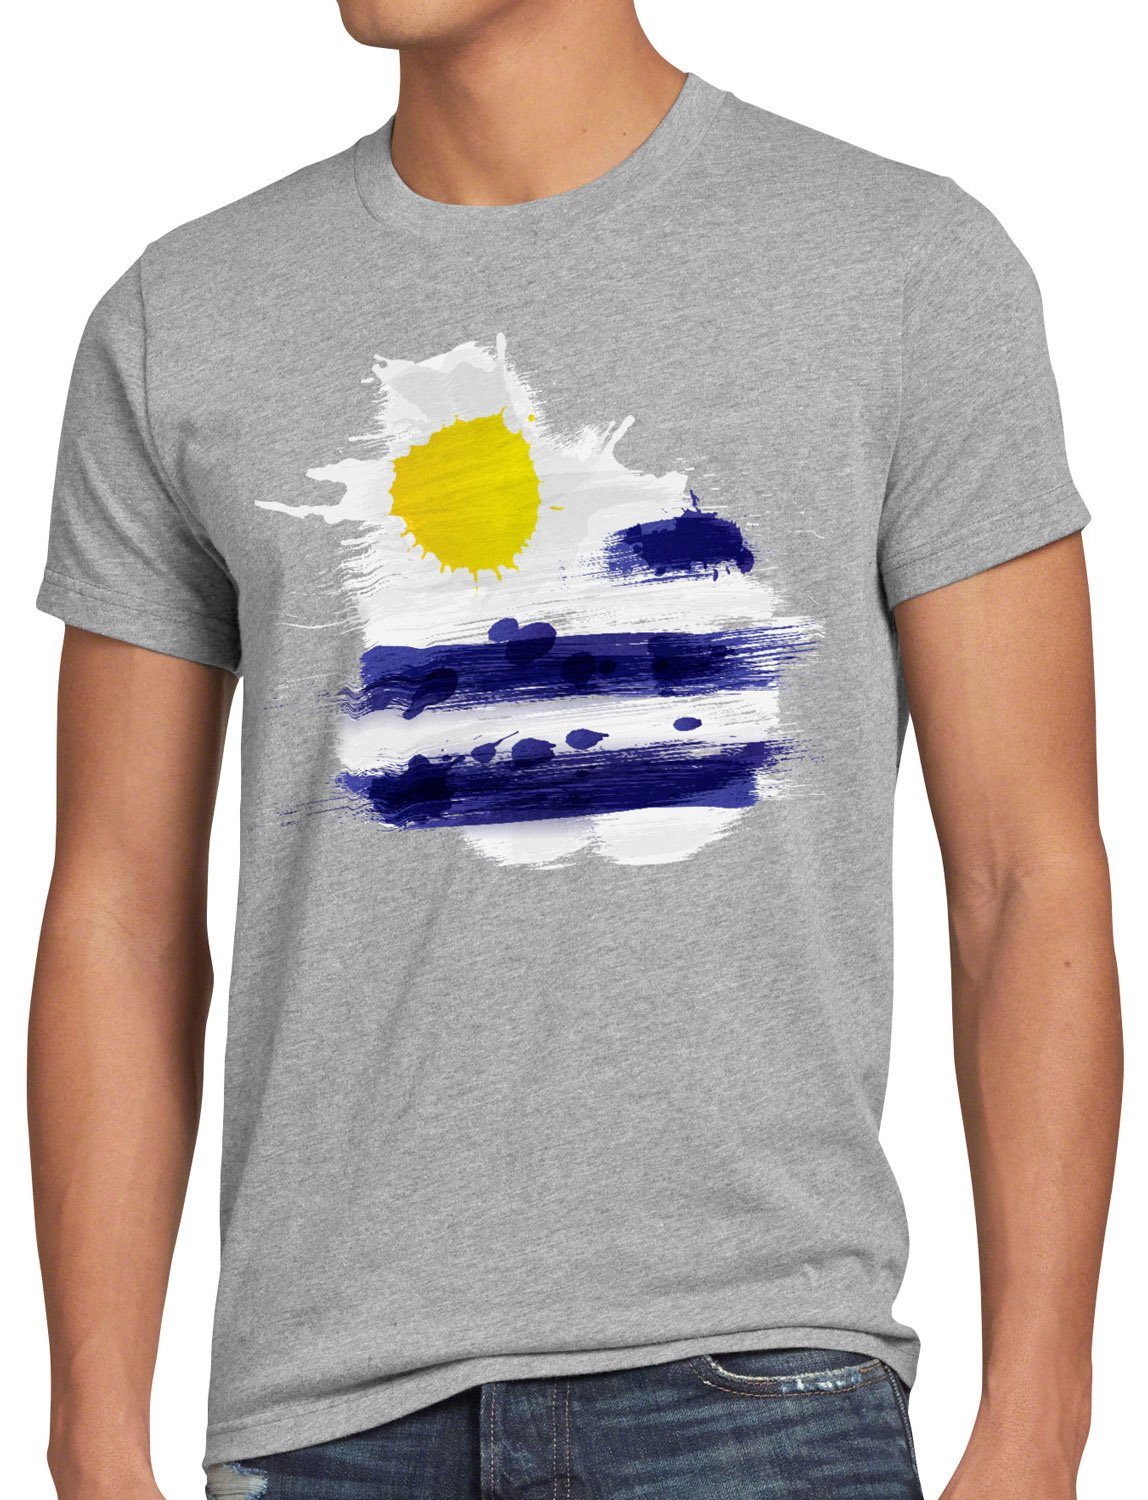 Sport WM meliert T-Shirt Fahne style3 EM Flagge Flag Herren Uruguay grau Fußball Print-Shirt